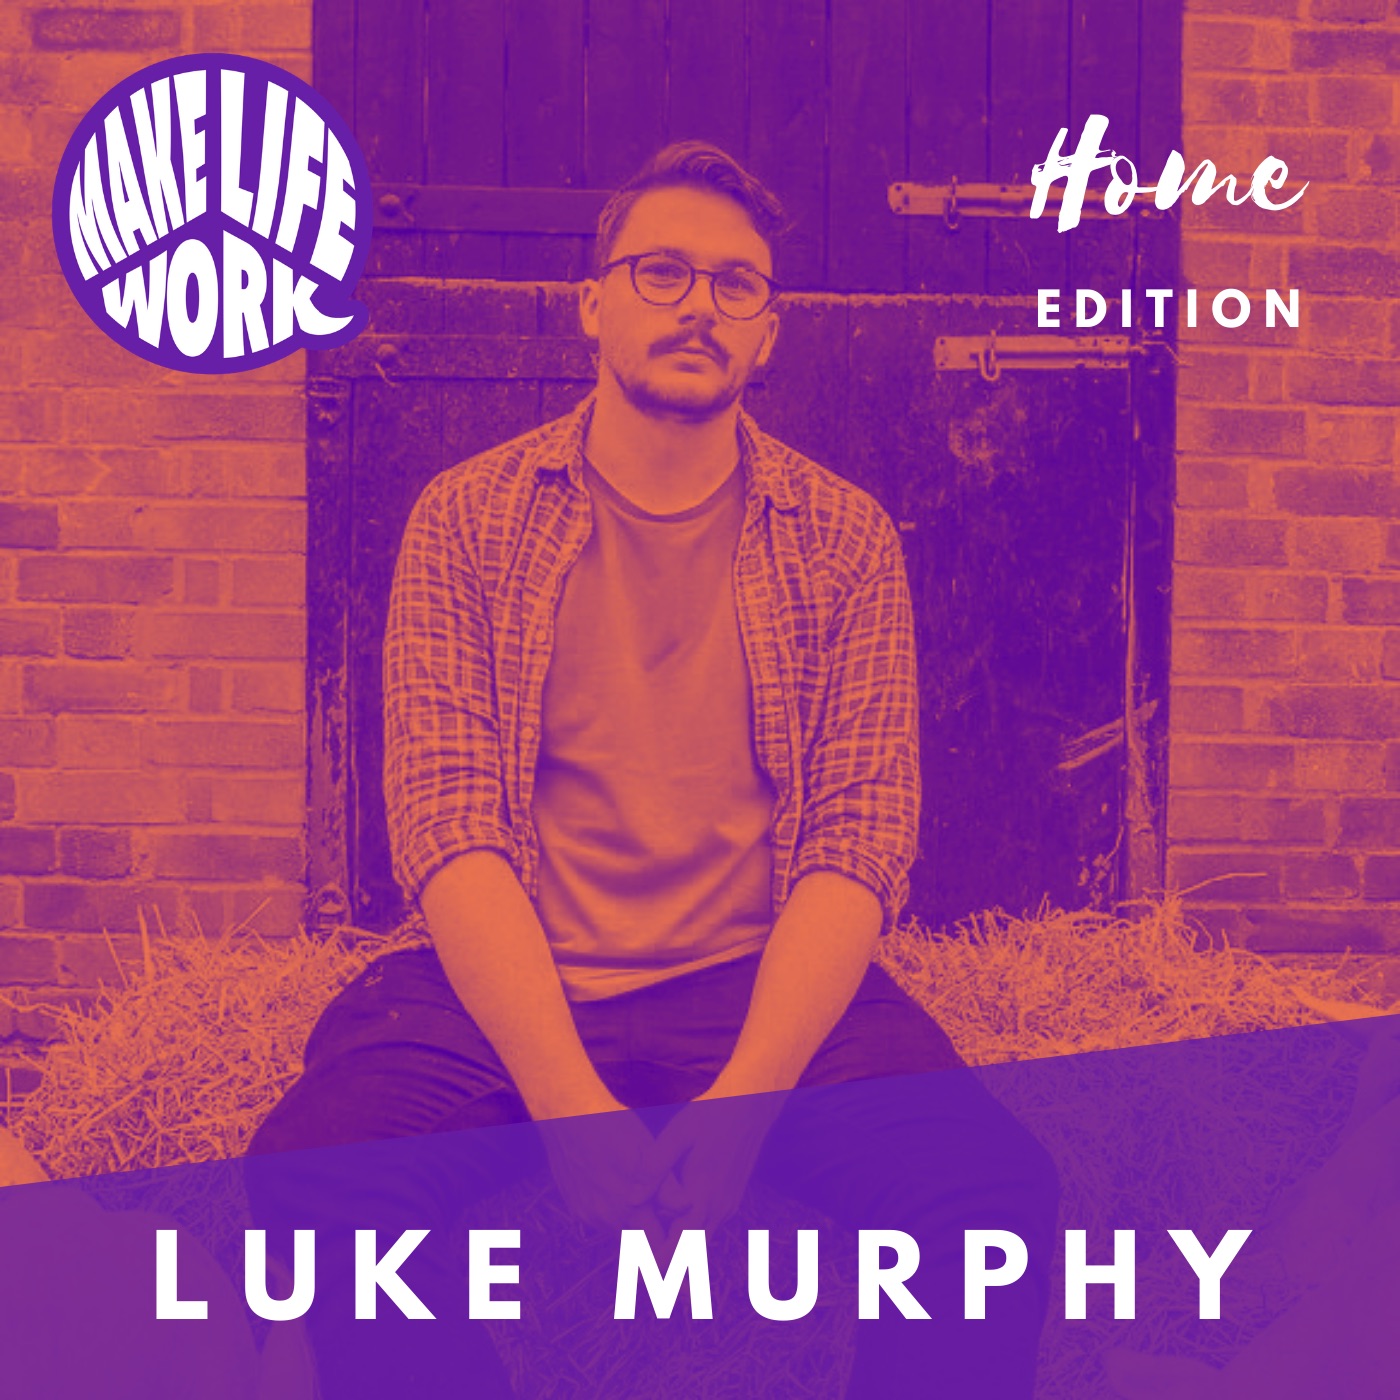 Make Life Work with Luke Murphy